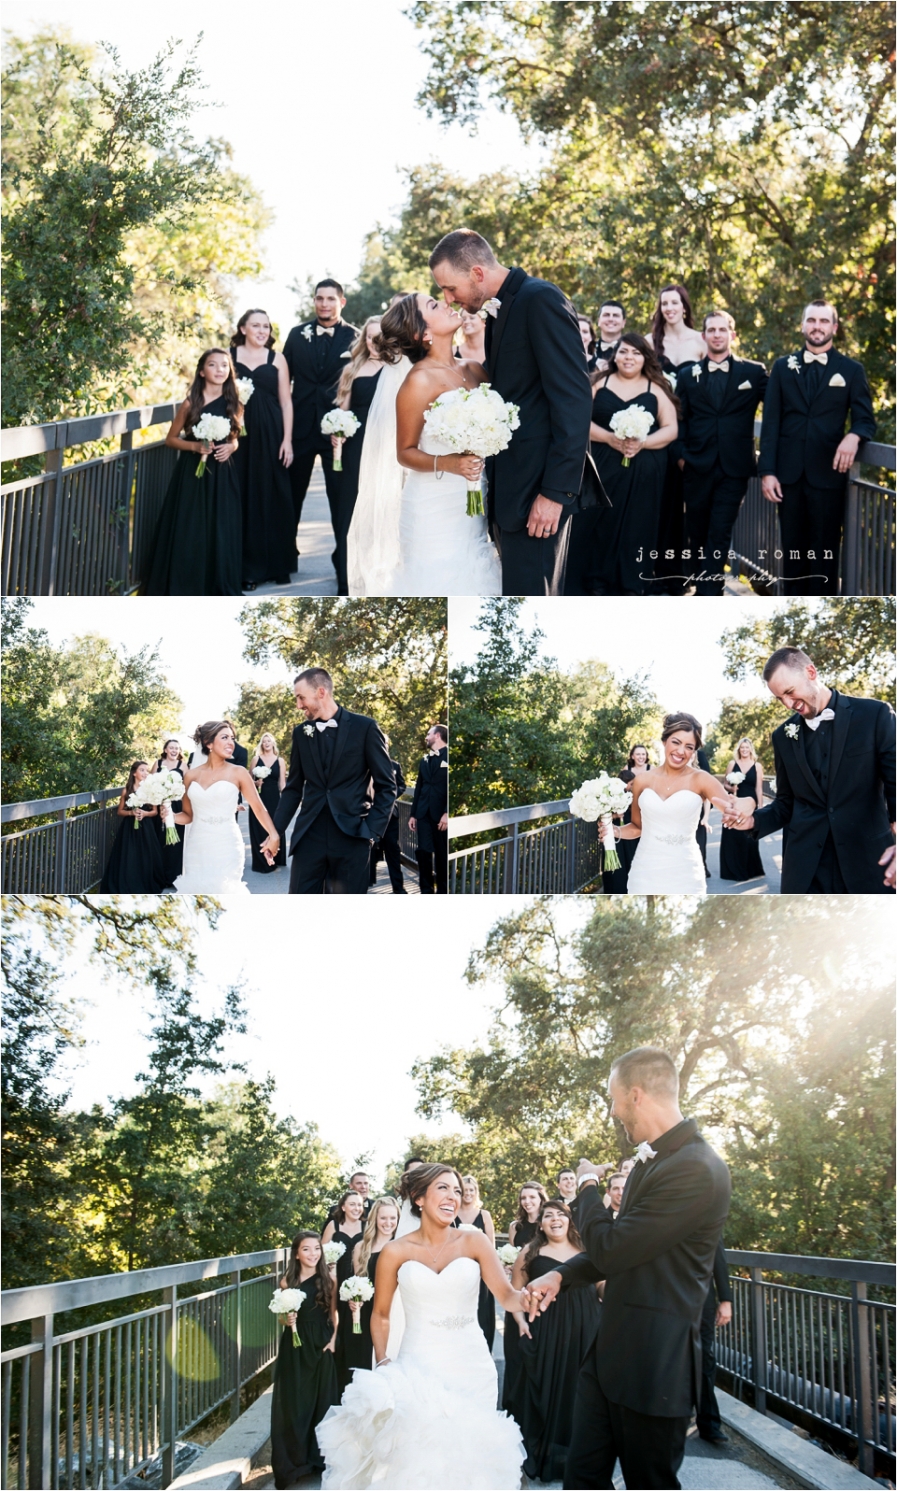 Jessica Roman Photography: Nicole & Eric's Wedding at Morgan Creek in Roseville, CA